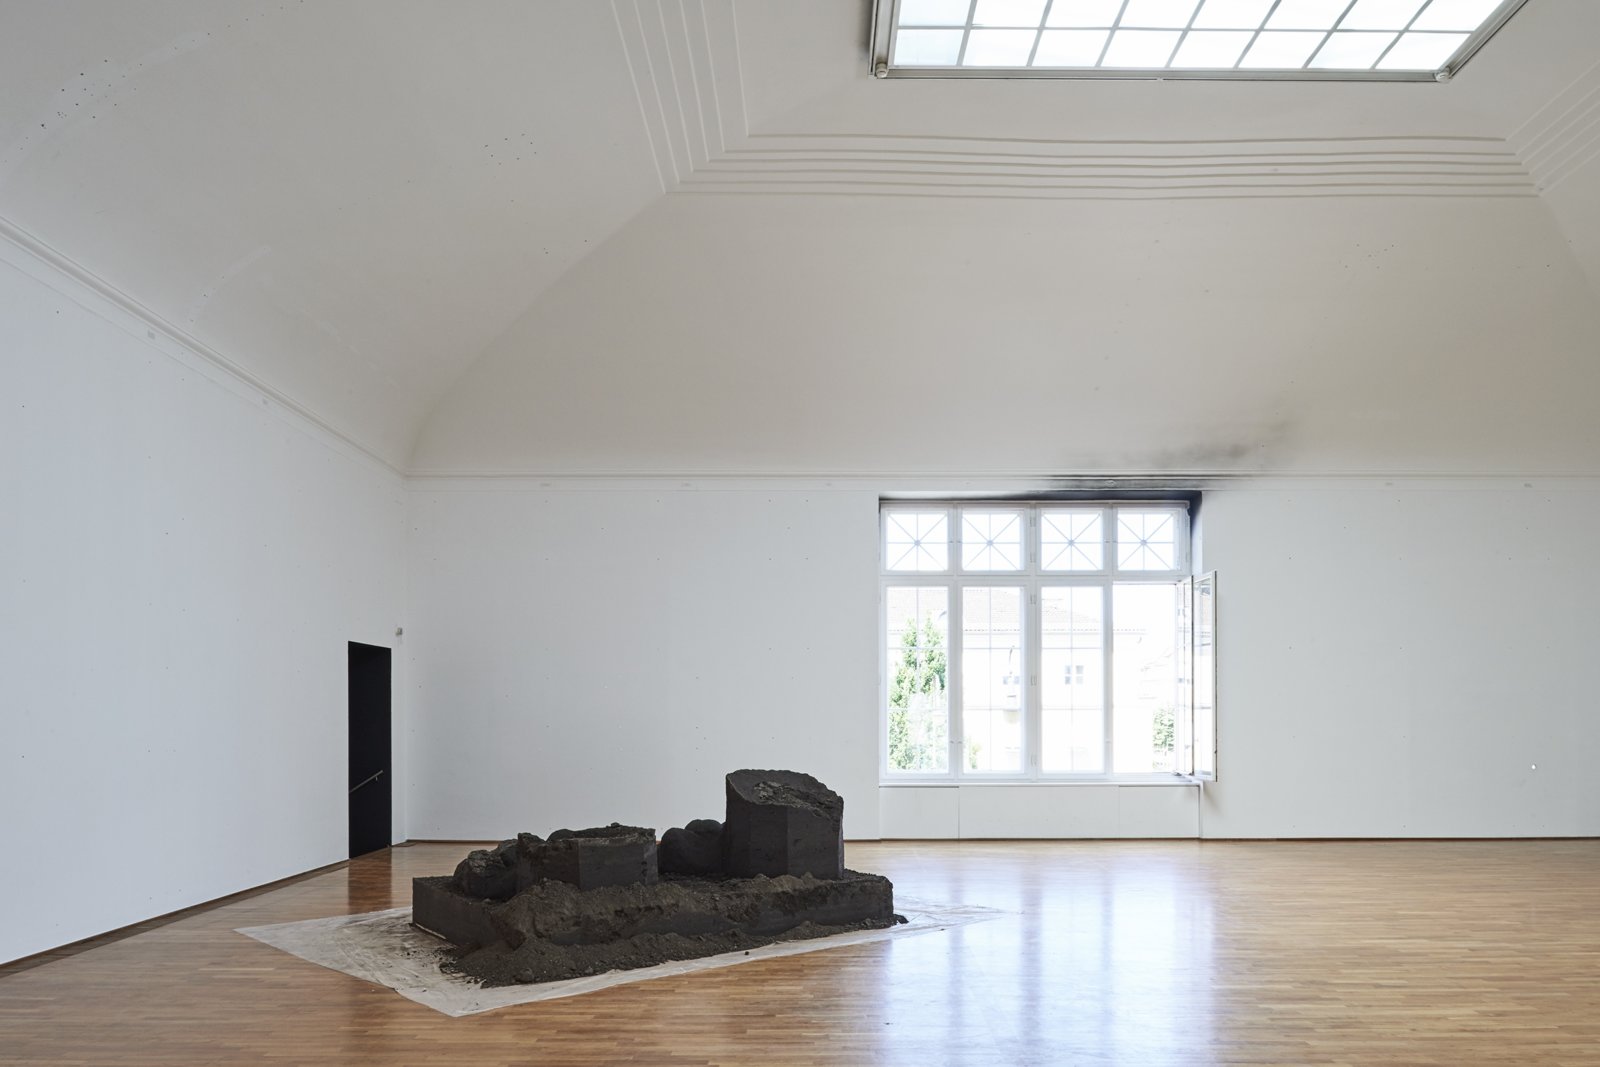 Abbas Akhavan, Variations on Ghost, 2017, soil, water, 47 x 126 x 87 in. (120 x 320 x 220 cm). Installation view, Museum Villa Stuck, Munich, Germany, 2017